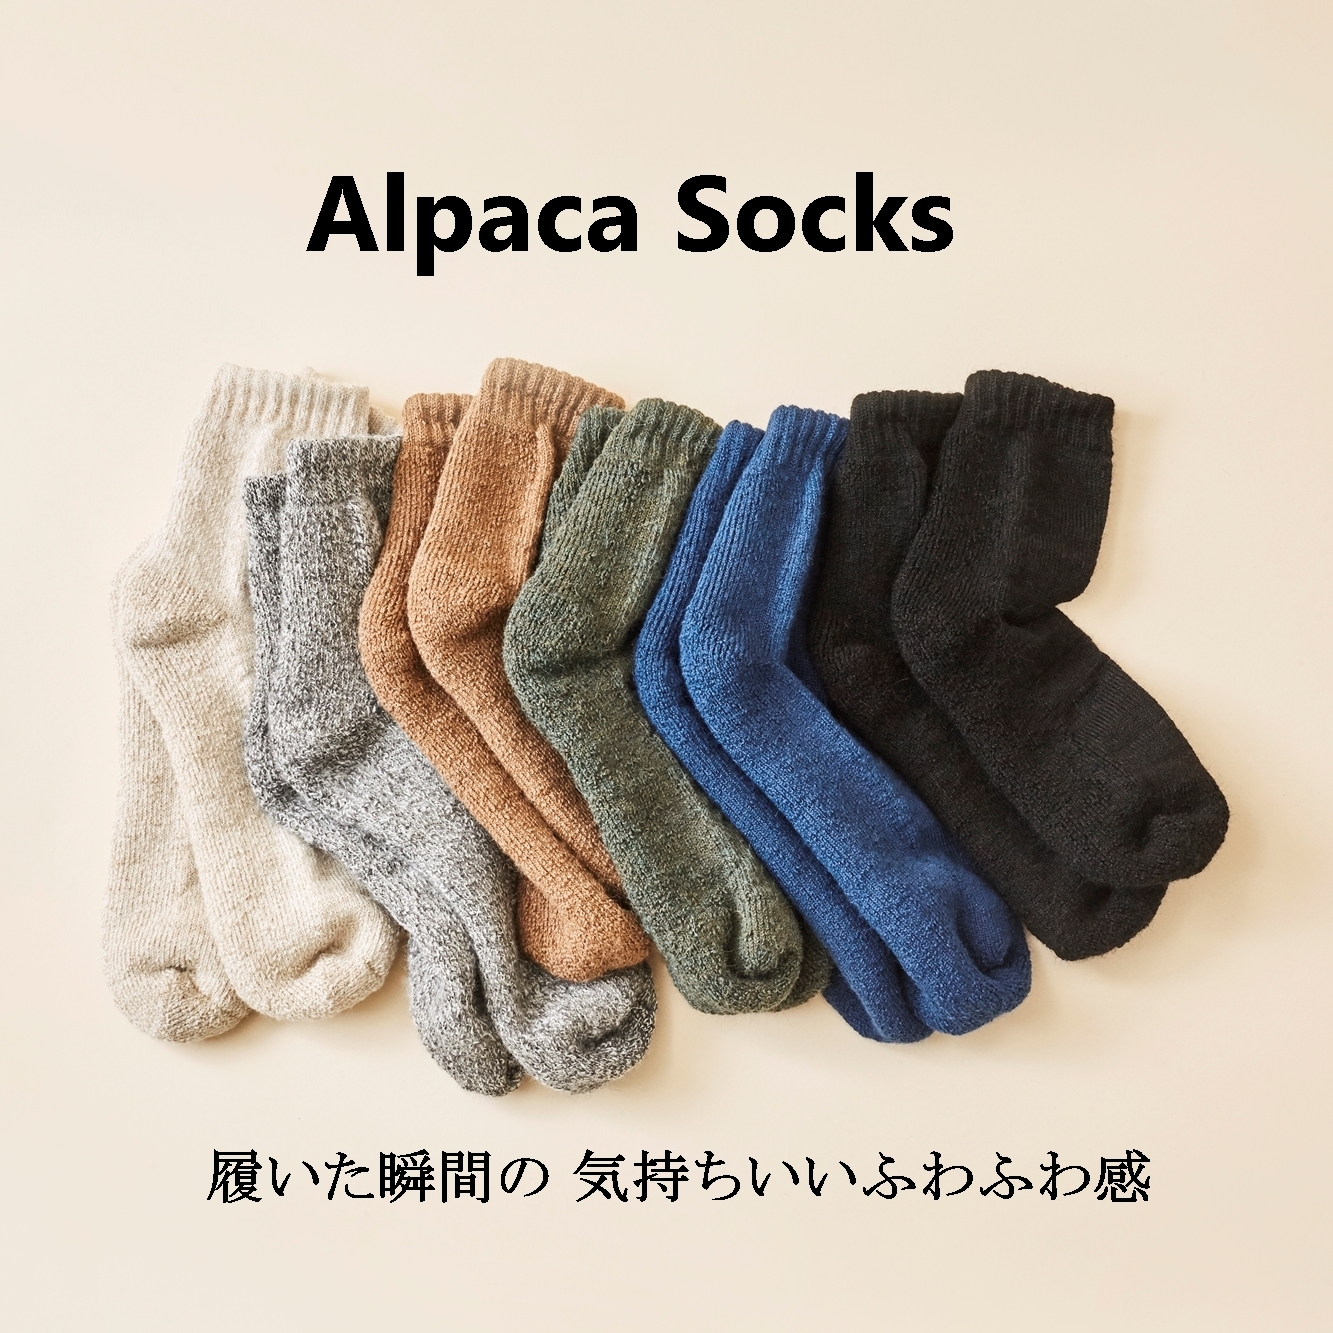 alpaca_1610167358-s-600